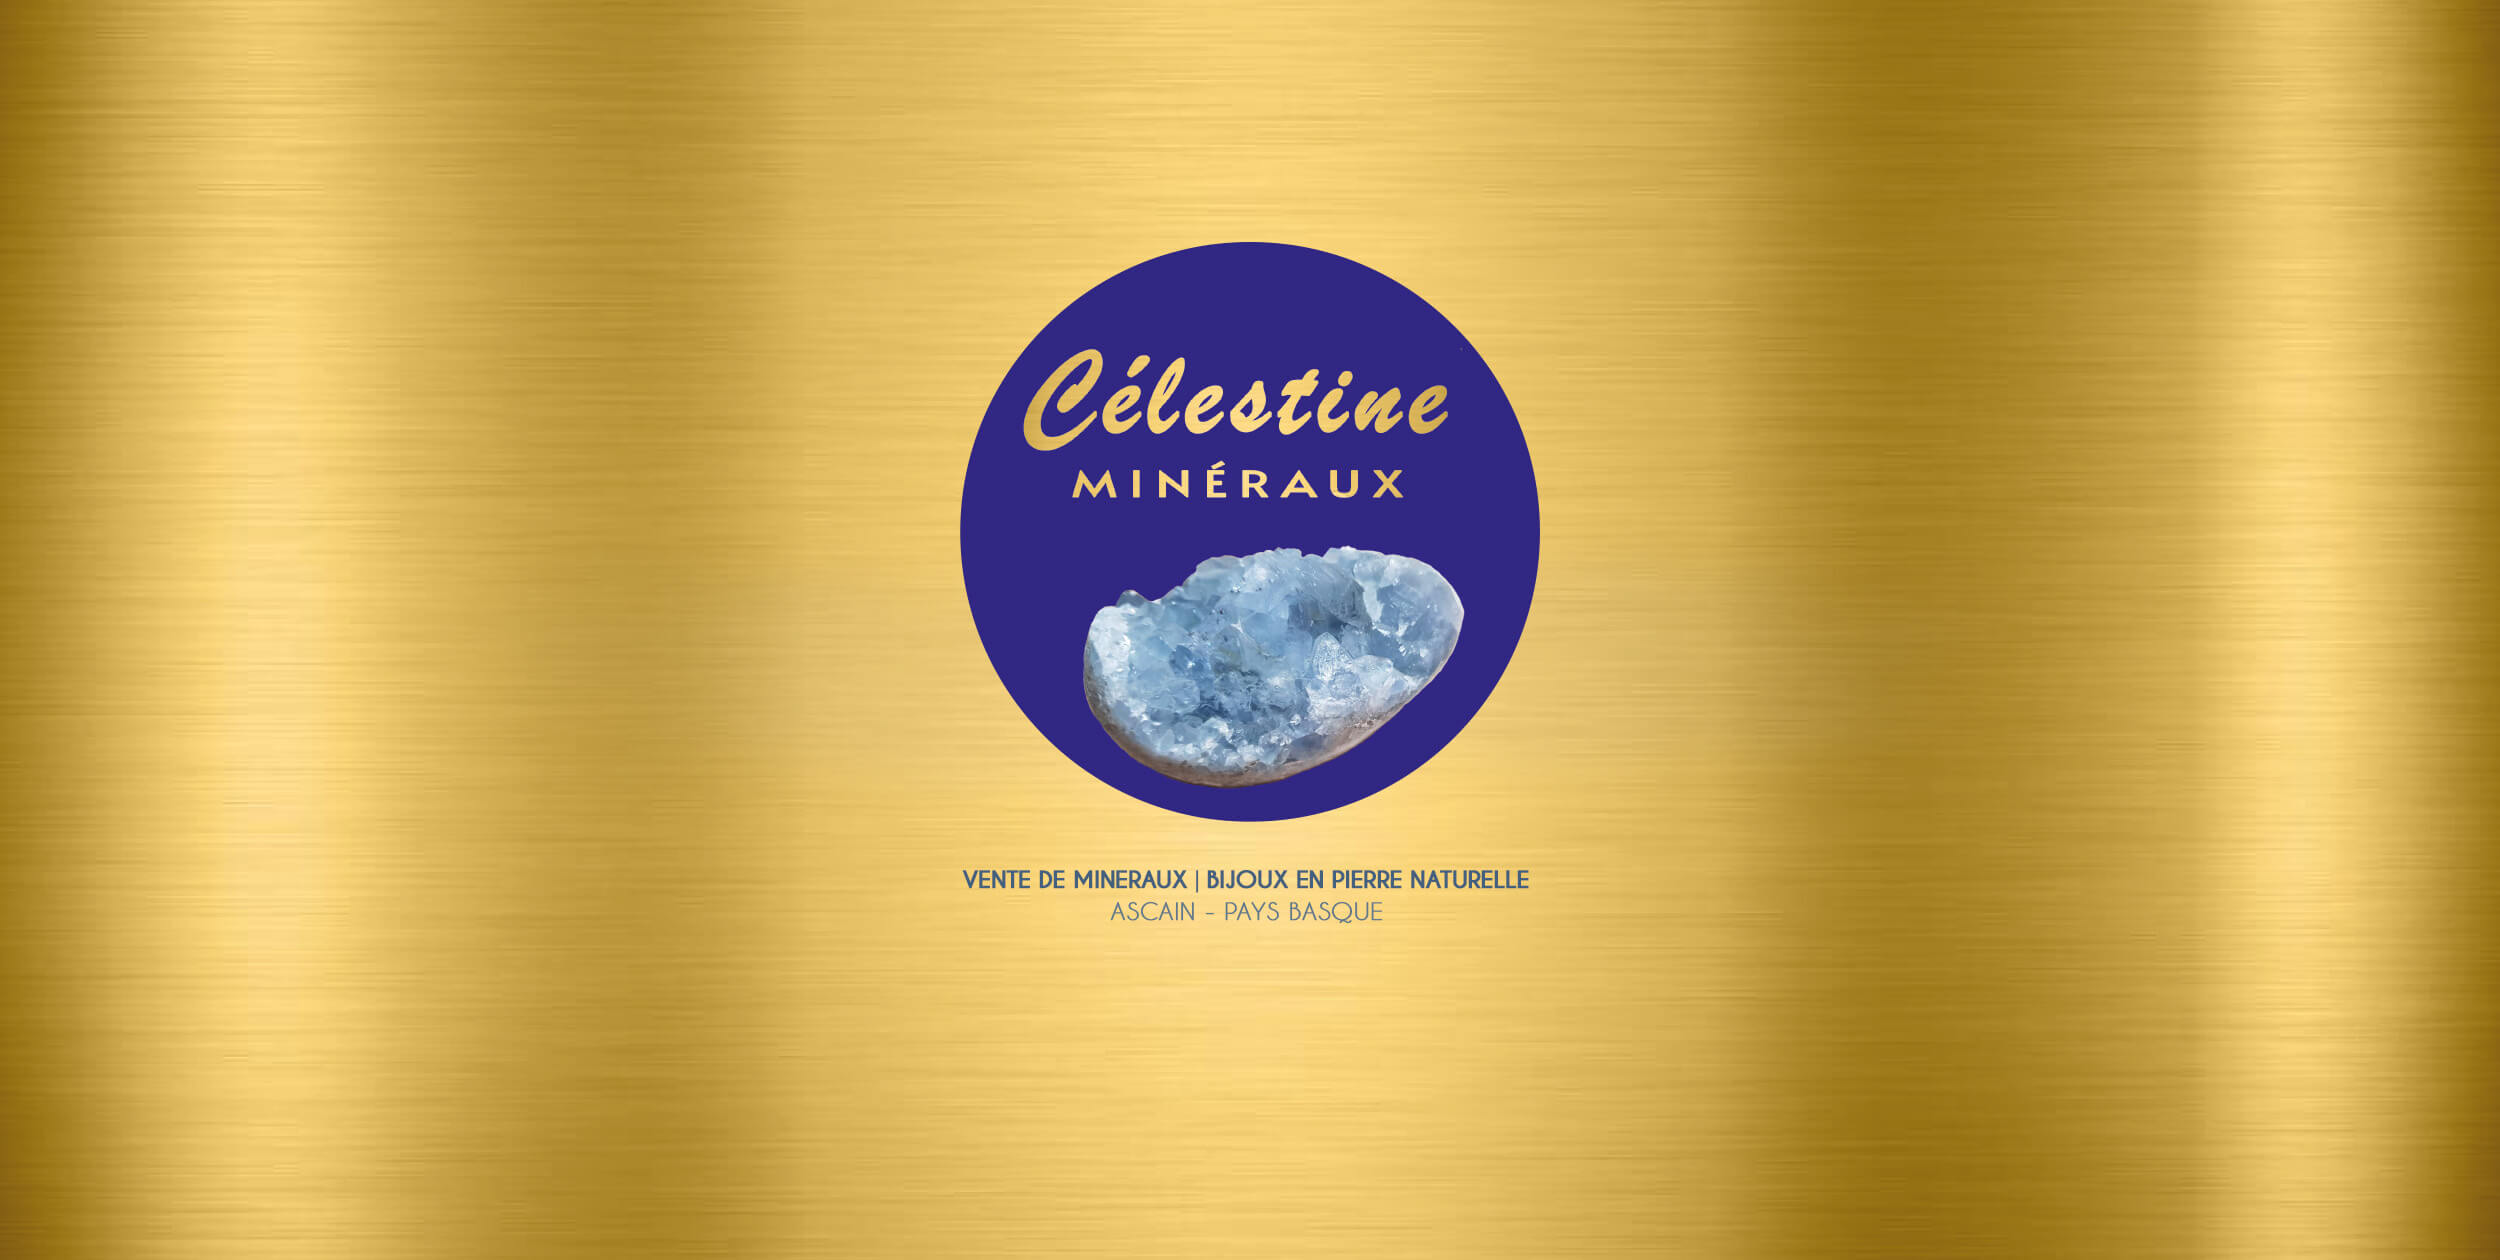 Célestine Minéraux I 06 71 82 10 27